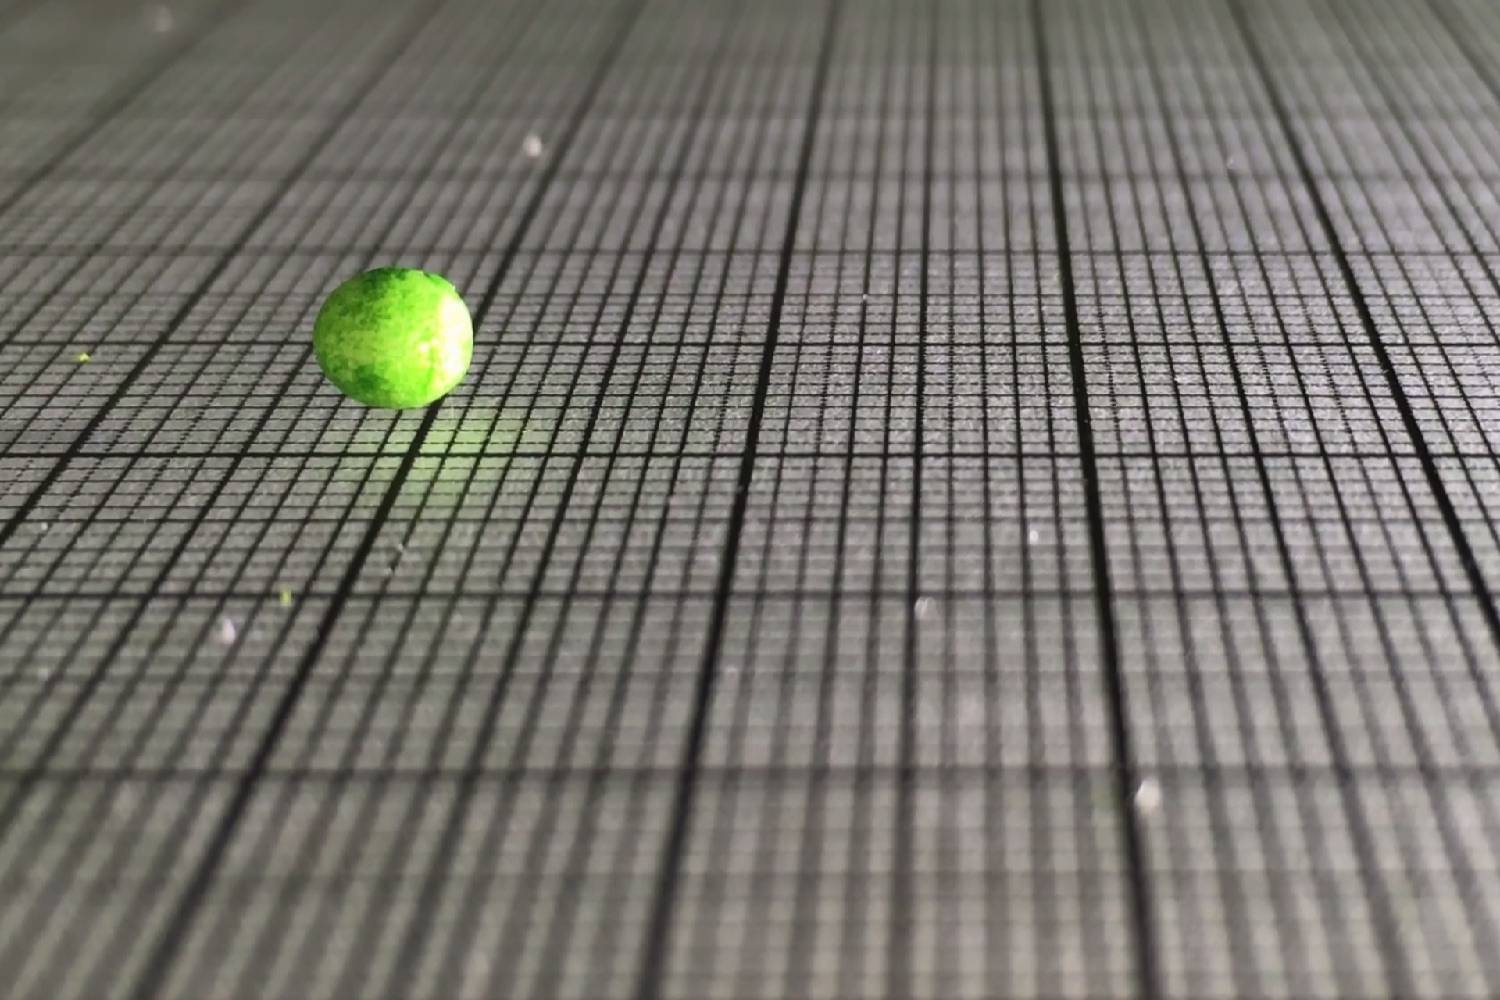 printer lasers ultrasonic sound levitation